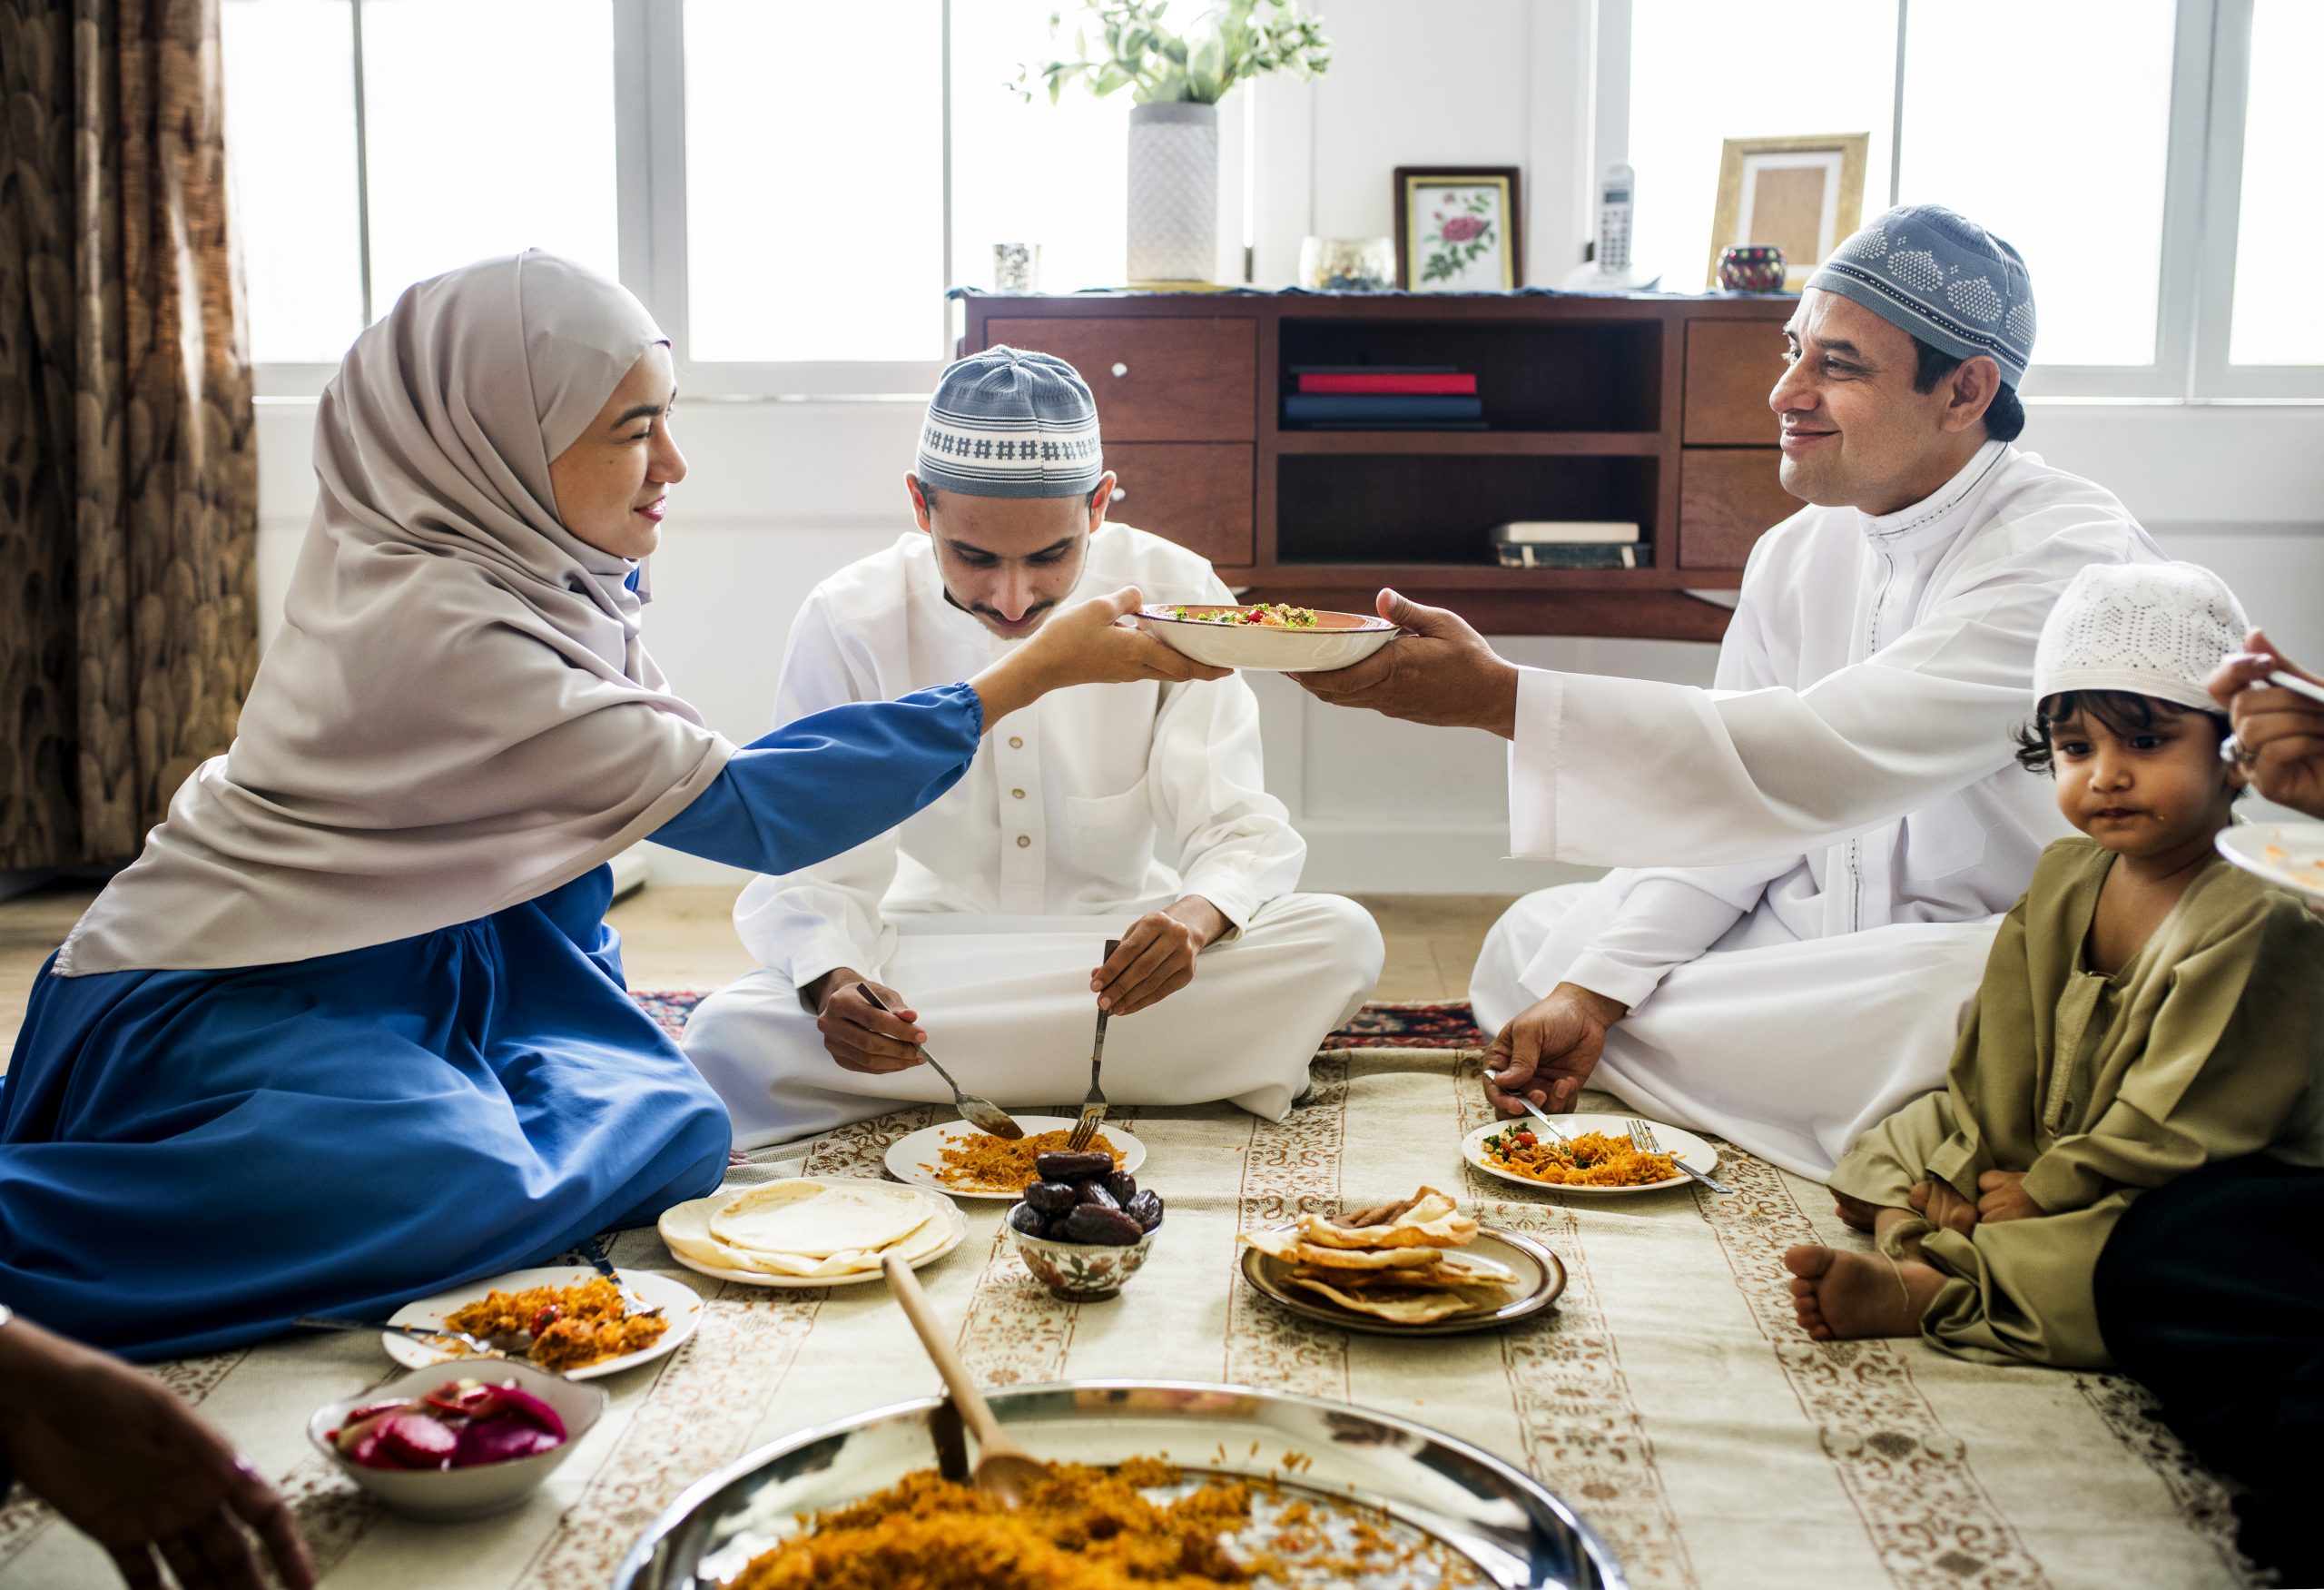 Зачем нужен рамадан. Мусульманская семья. Арабская семья. Традиционная мусульманская еда. Традиции мусульман в семье.